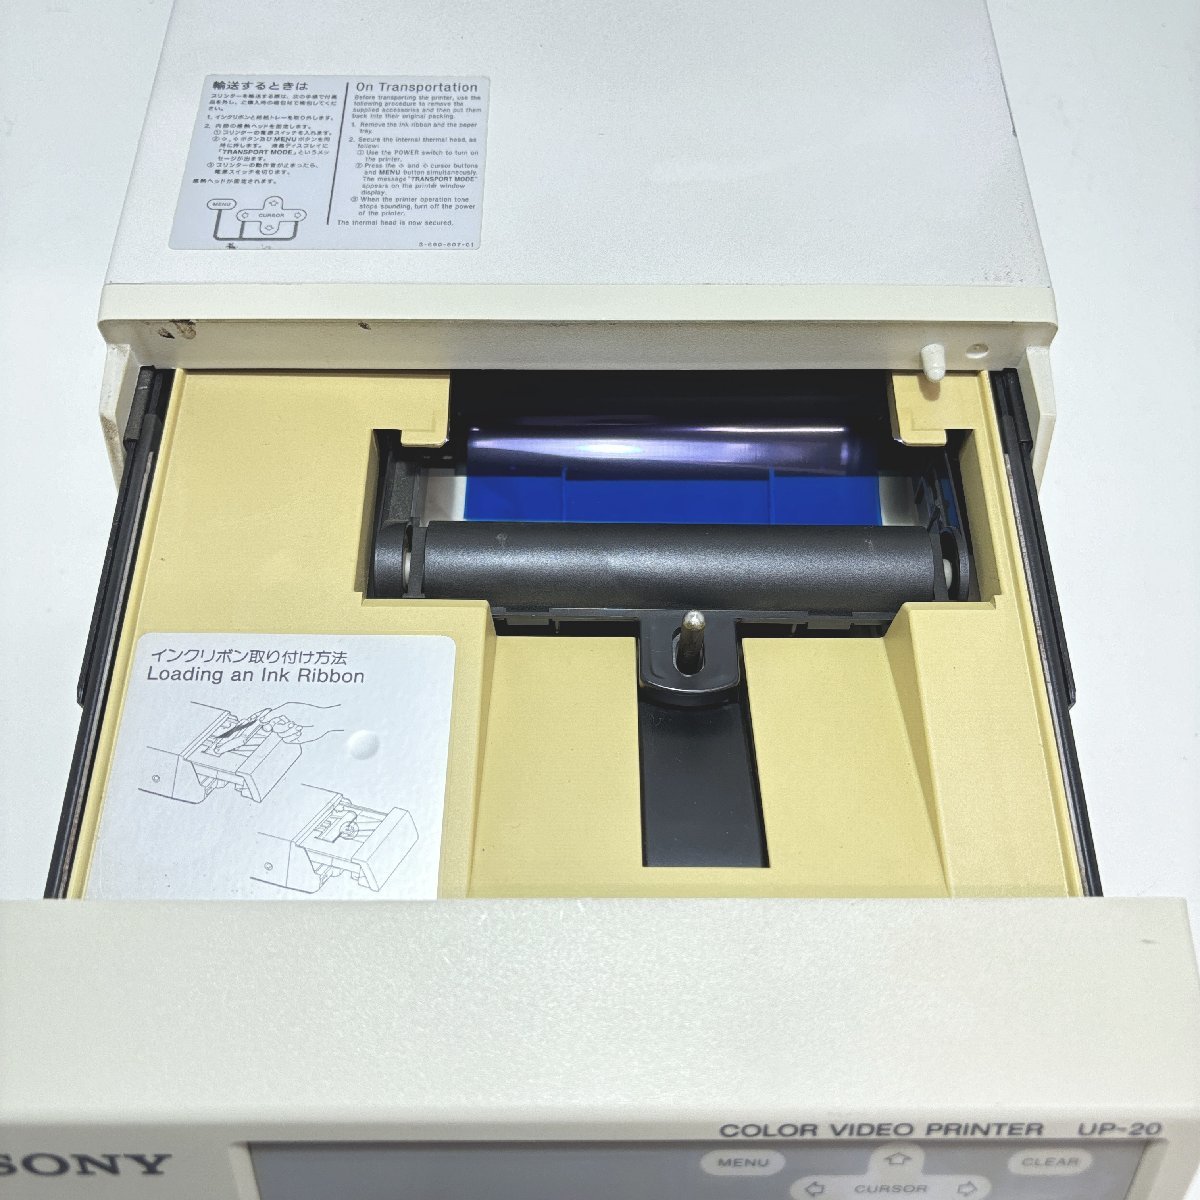 SONY COLOR VIDEO PRINTER UP-20 цвет видео принтер Sony Junk 1105320